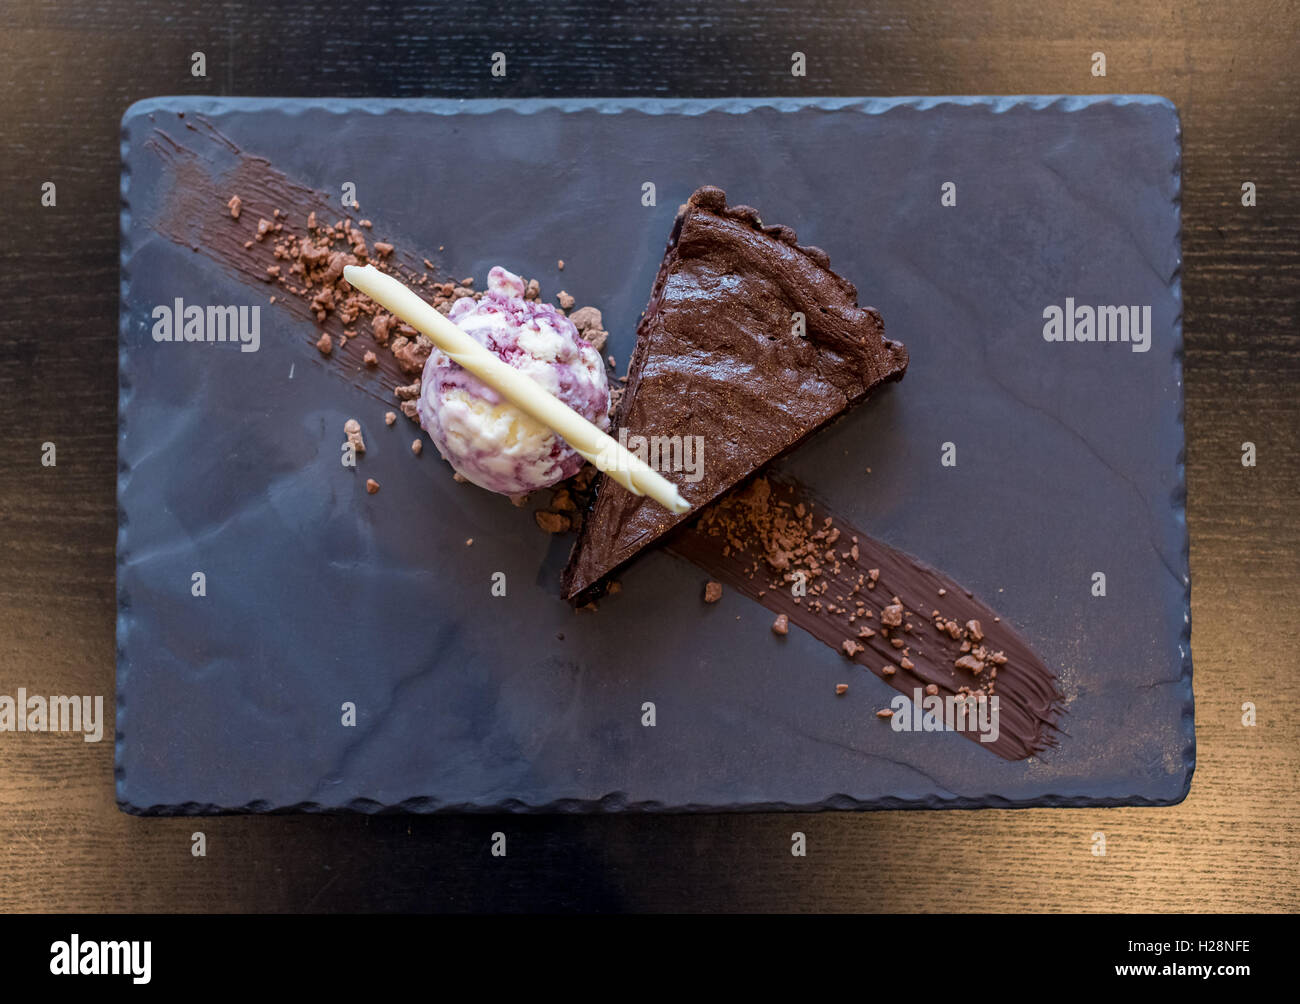 Chocolate cake and ice cream on a slate plate Stock Photo